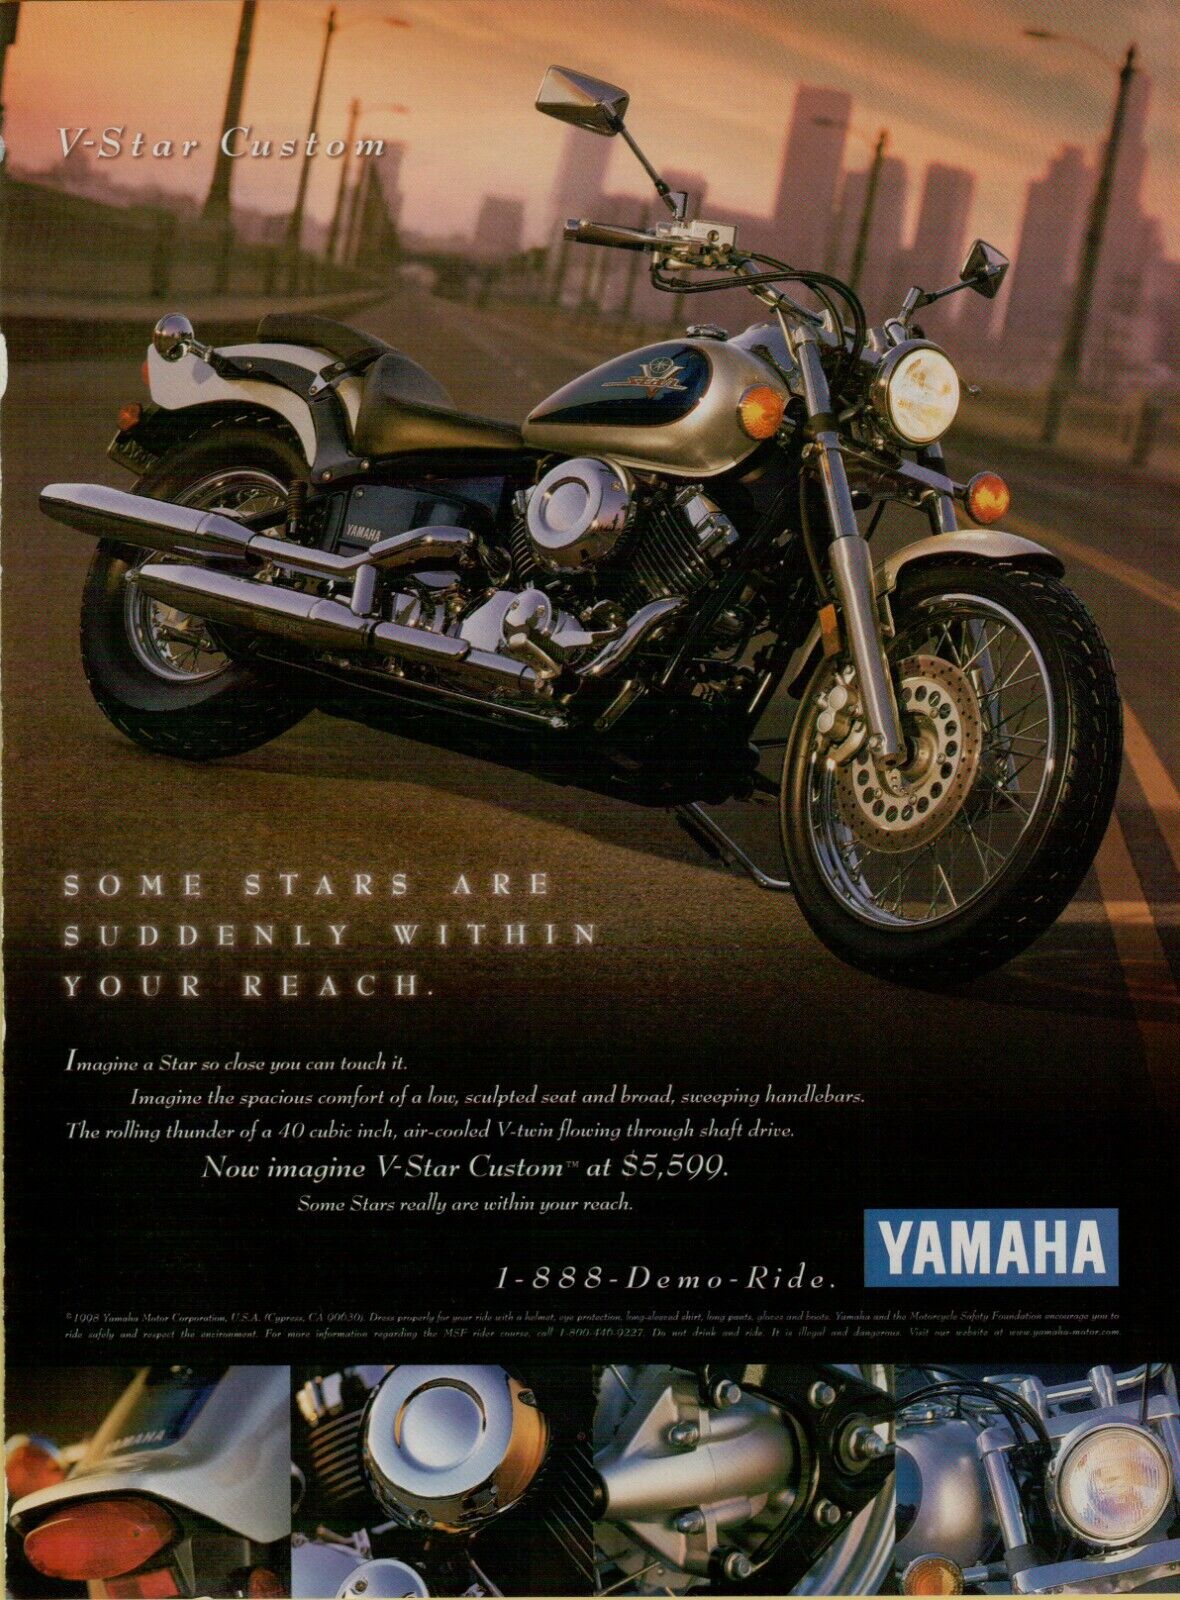 1998 Yamaha V-star Custom Motorcycle City Photo Black Gold Bike Vintage Print Ad